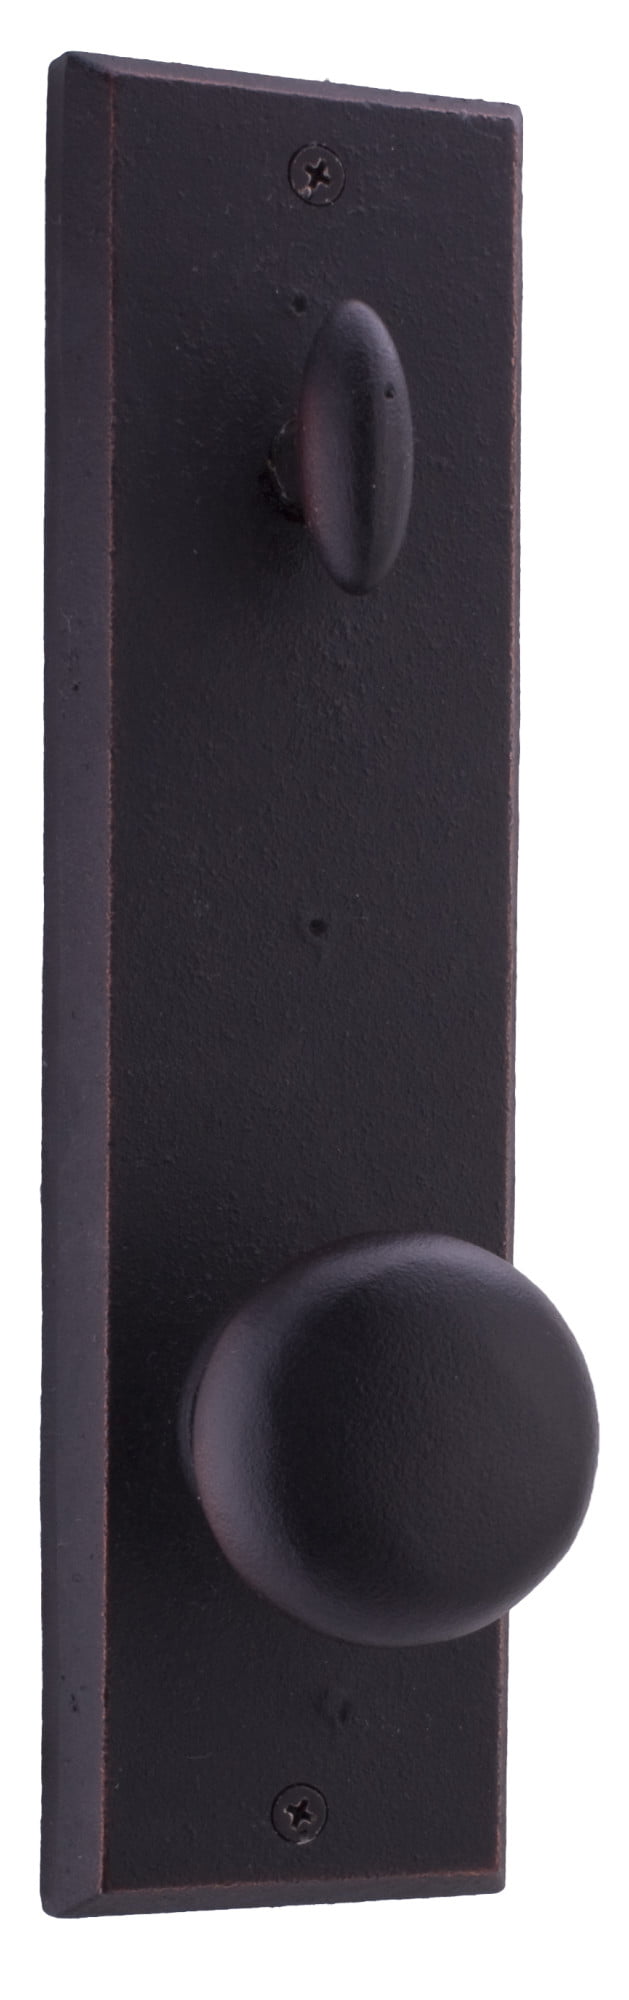 Weslock 7641m-rh Oil Rubbed Bronze Single Cylinder Right Handed Entry Set for sale online 